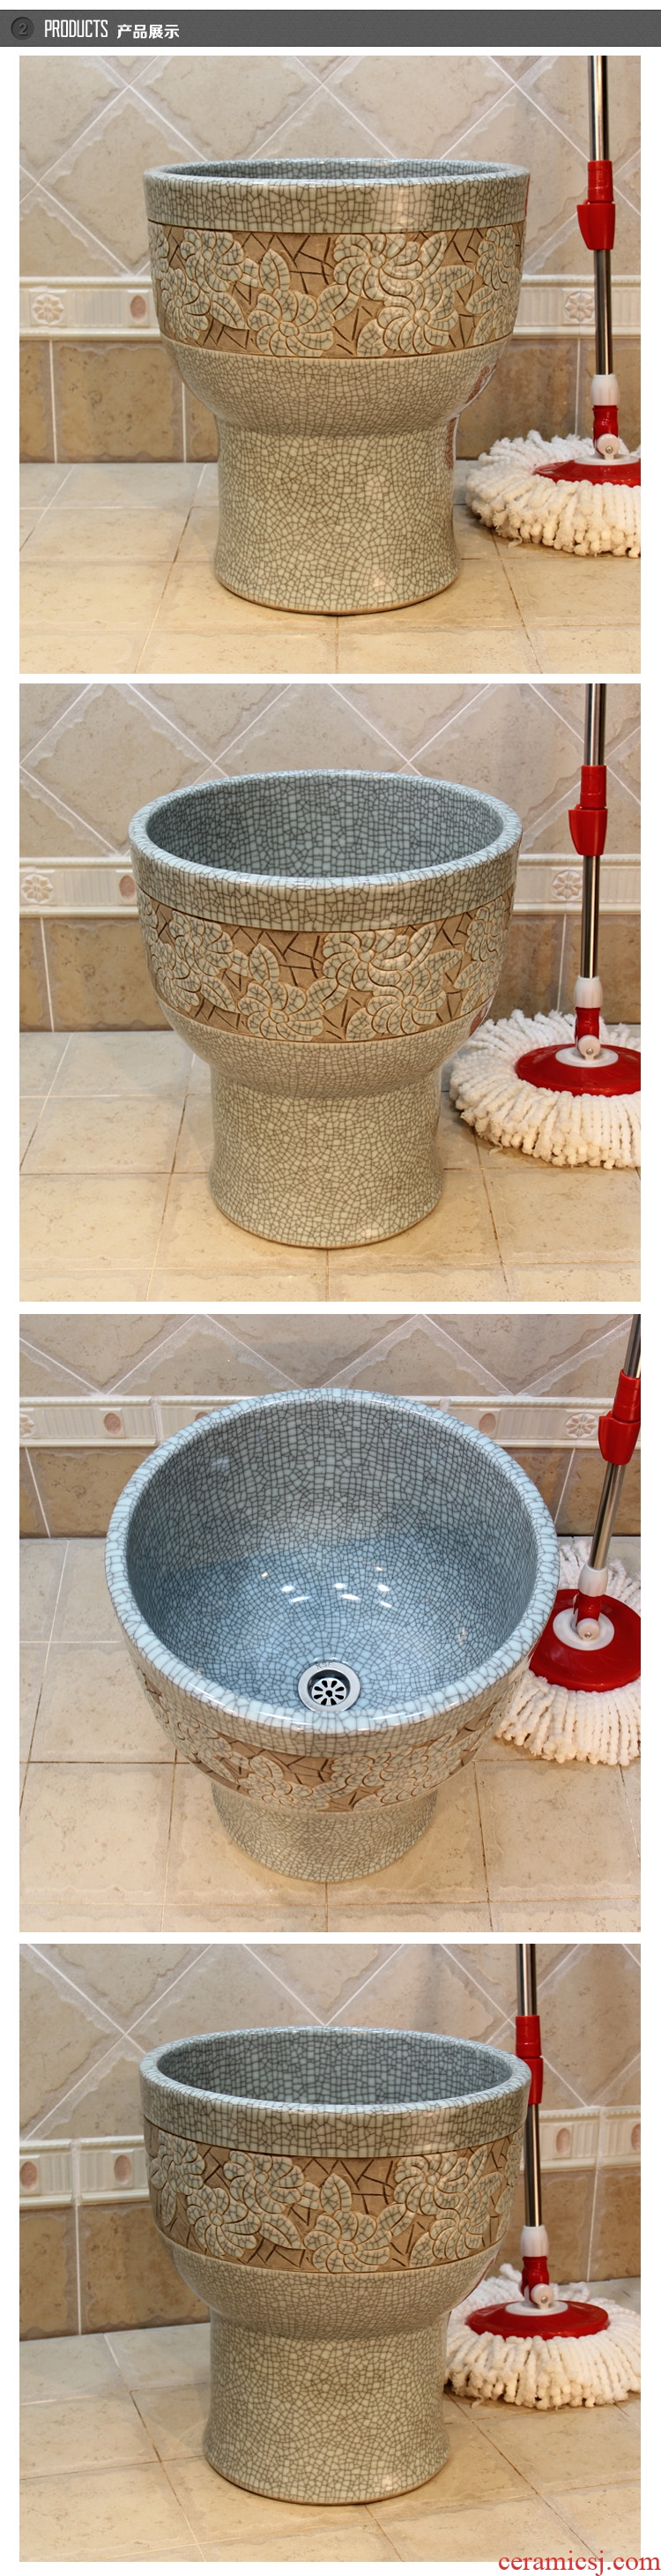 Jingdezhen ceramic art mop pool crack flowers 36 cm conjoined mop bucket mop pool the mop bucket